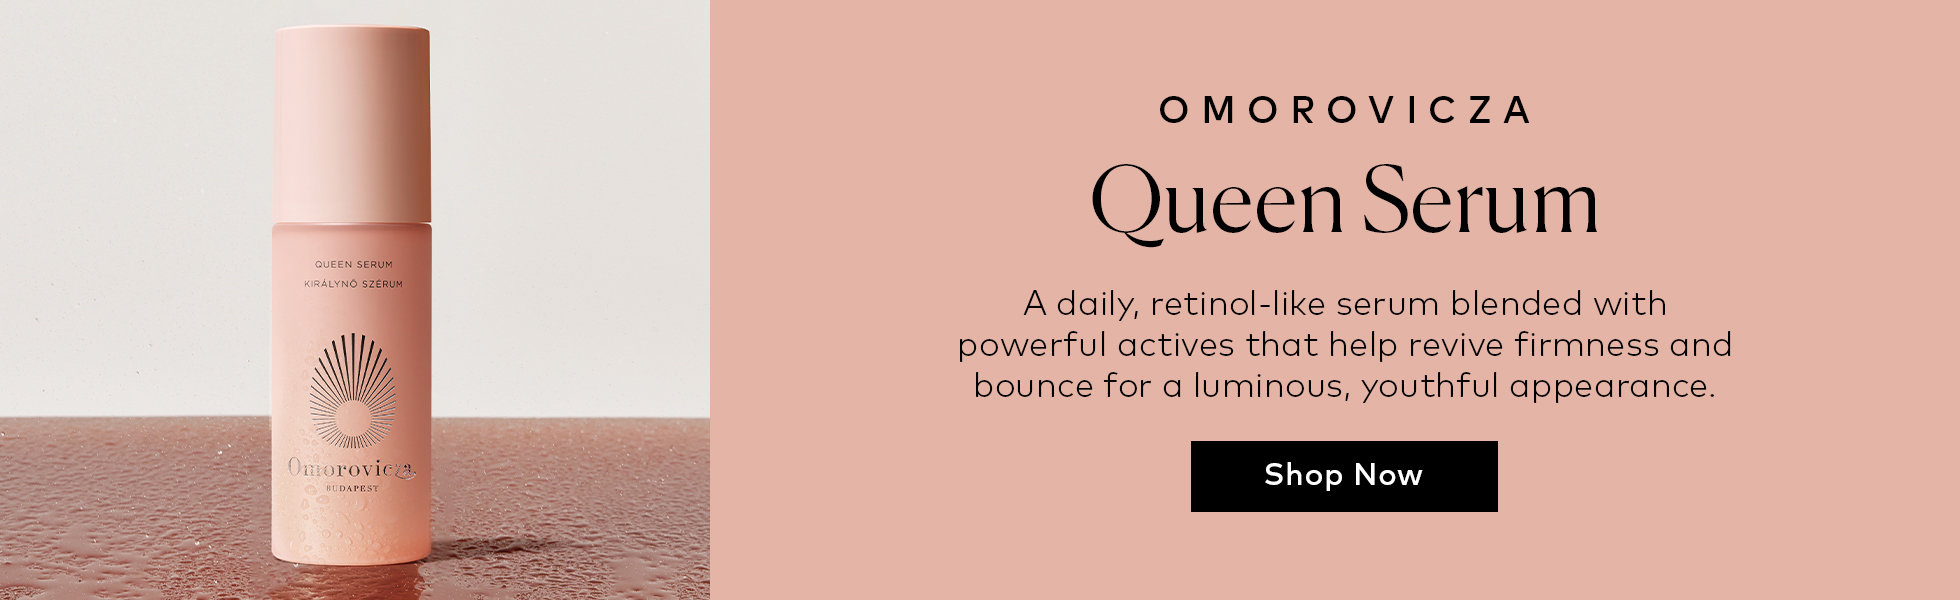 Shop the Omorovicza Queen Serum on Beautylish.com! 